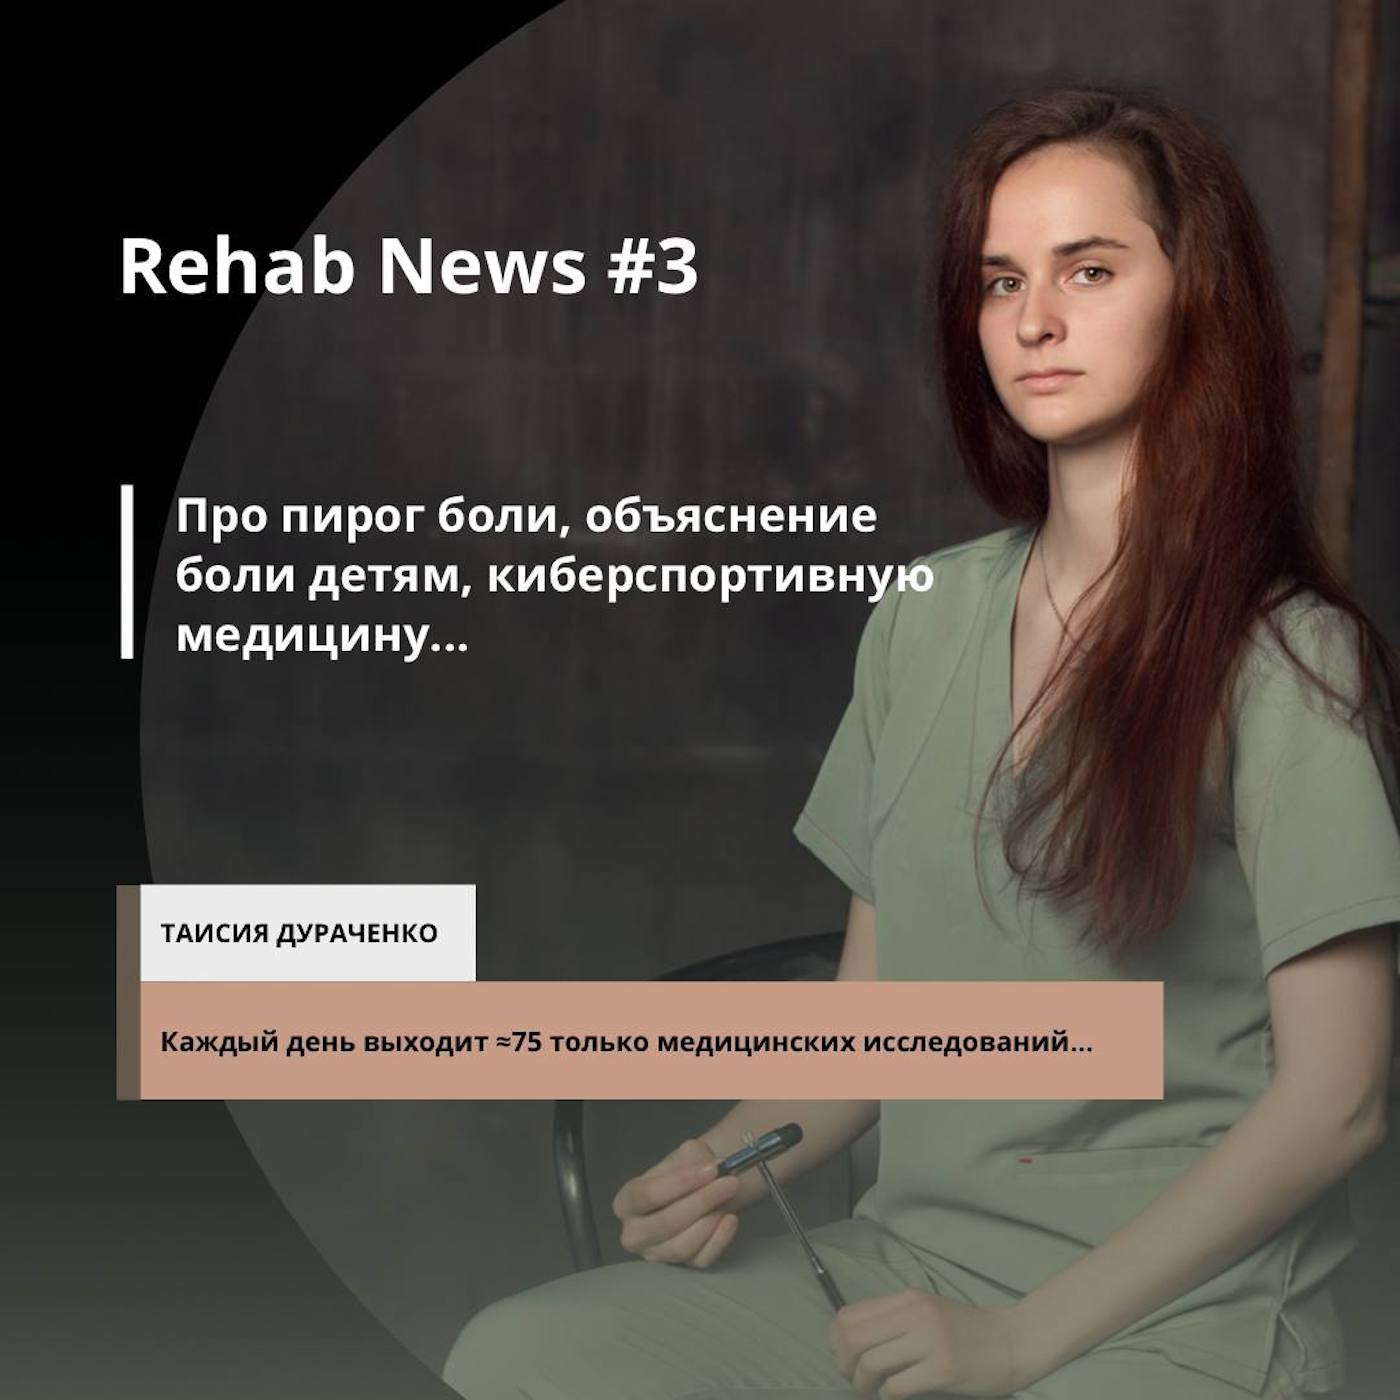 Rehab News #3